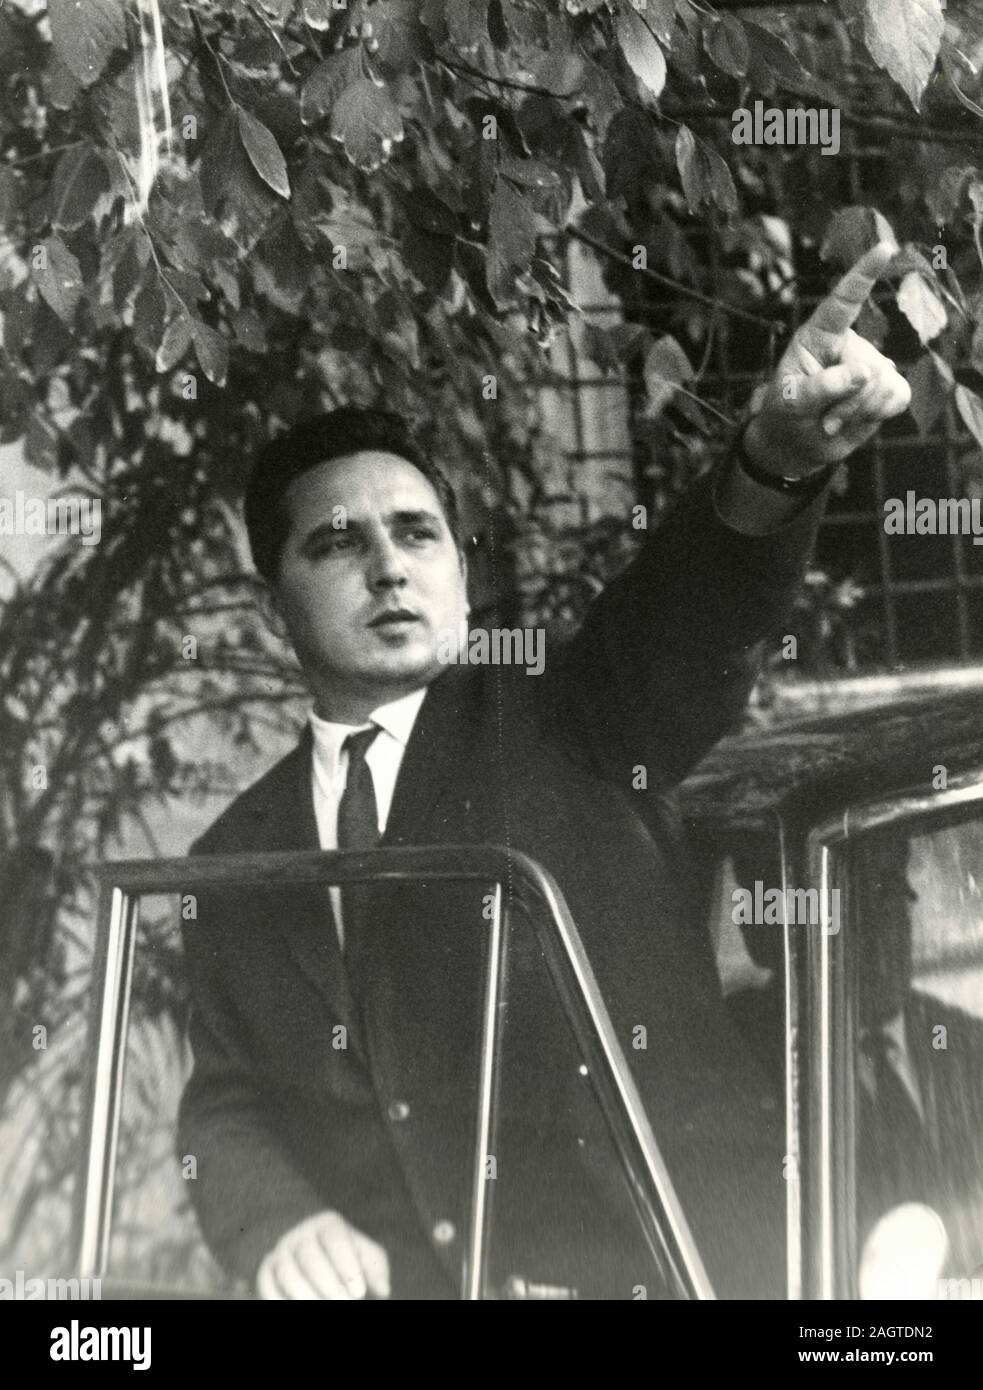 Italienische DC Christdemokratische Politiker Alcide Berloffa, Trento, Italien 1960 Stockfoto